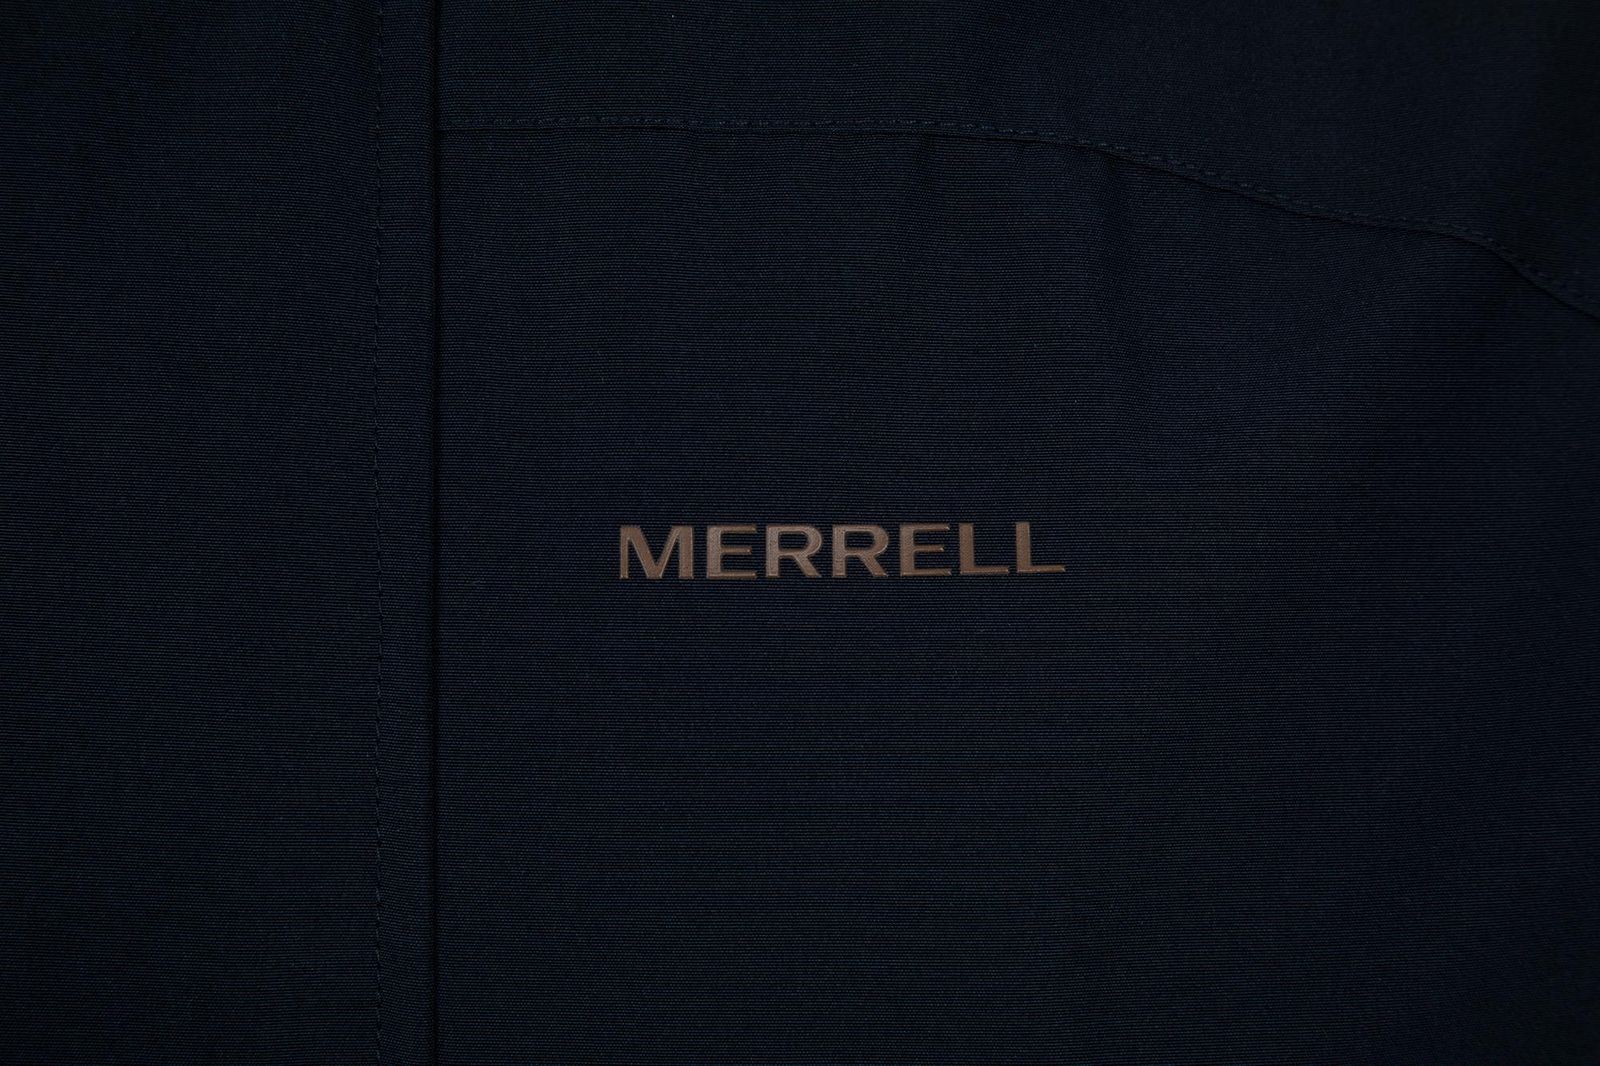   Merrell Men's Windbreaker, : -. S19AMRJAM09-Z4.  46